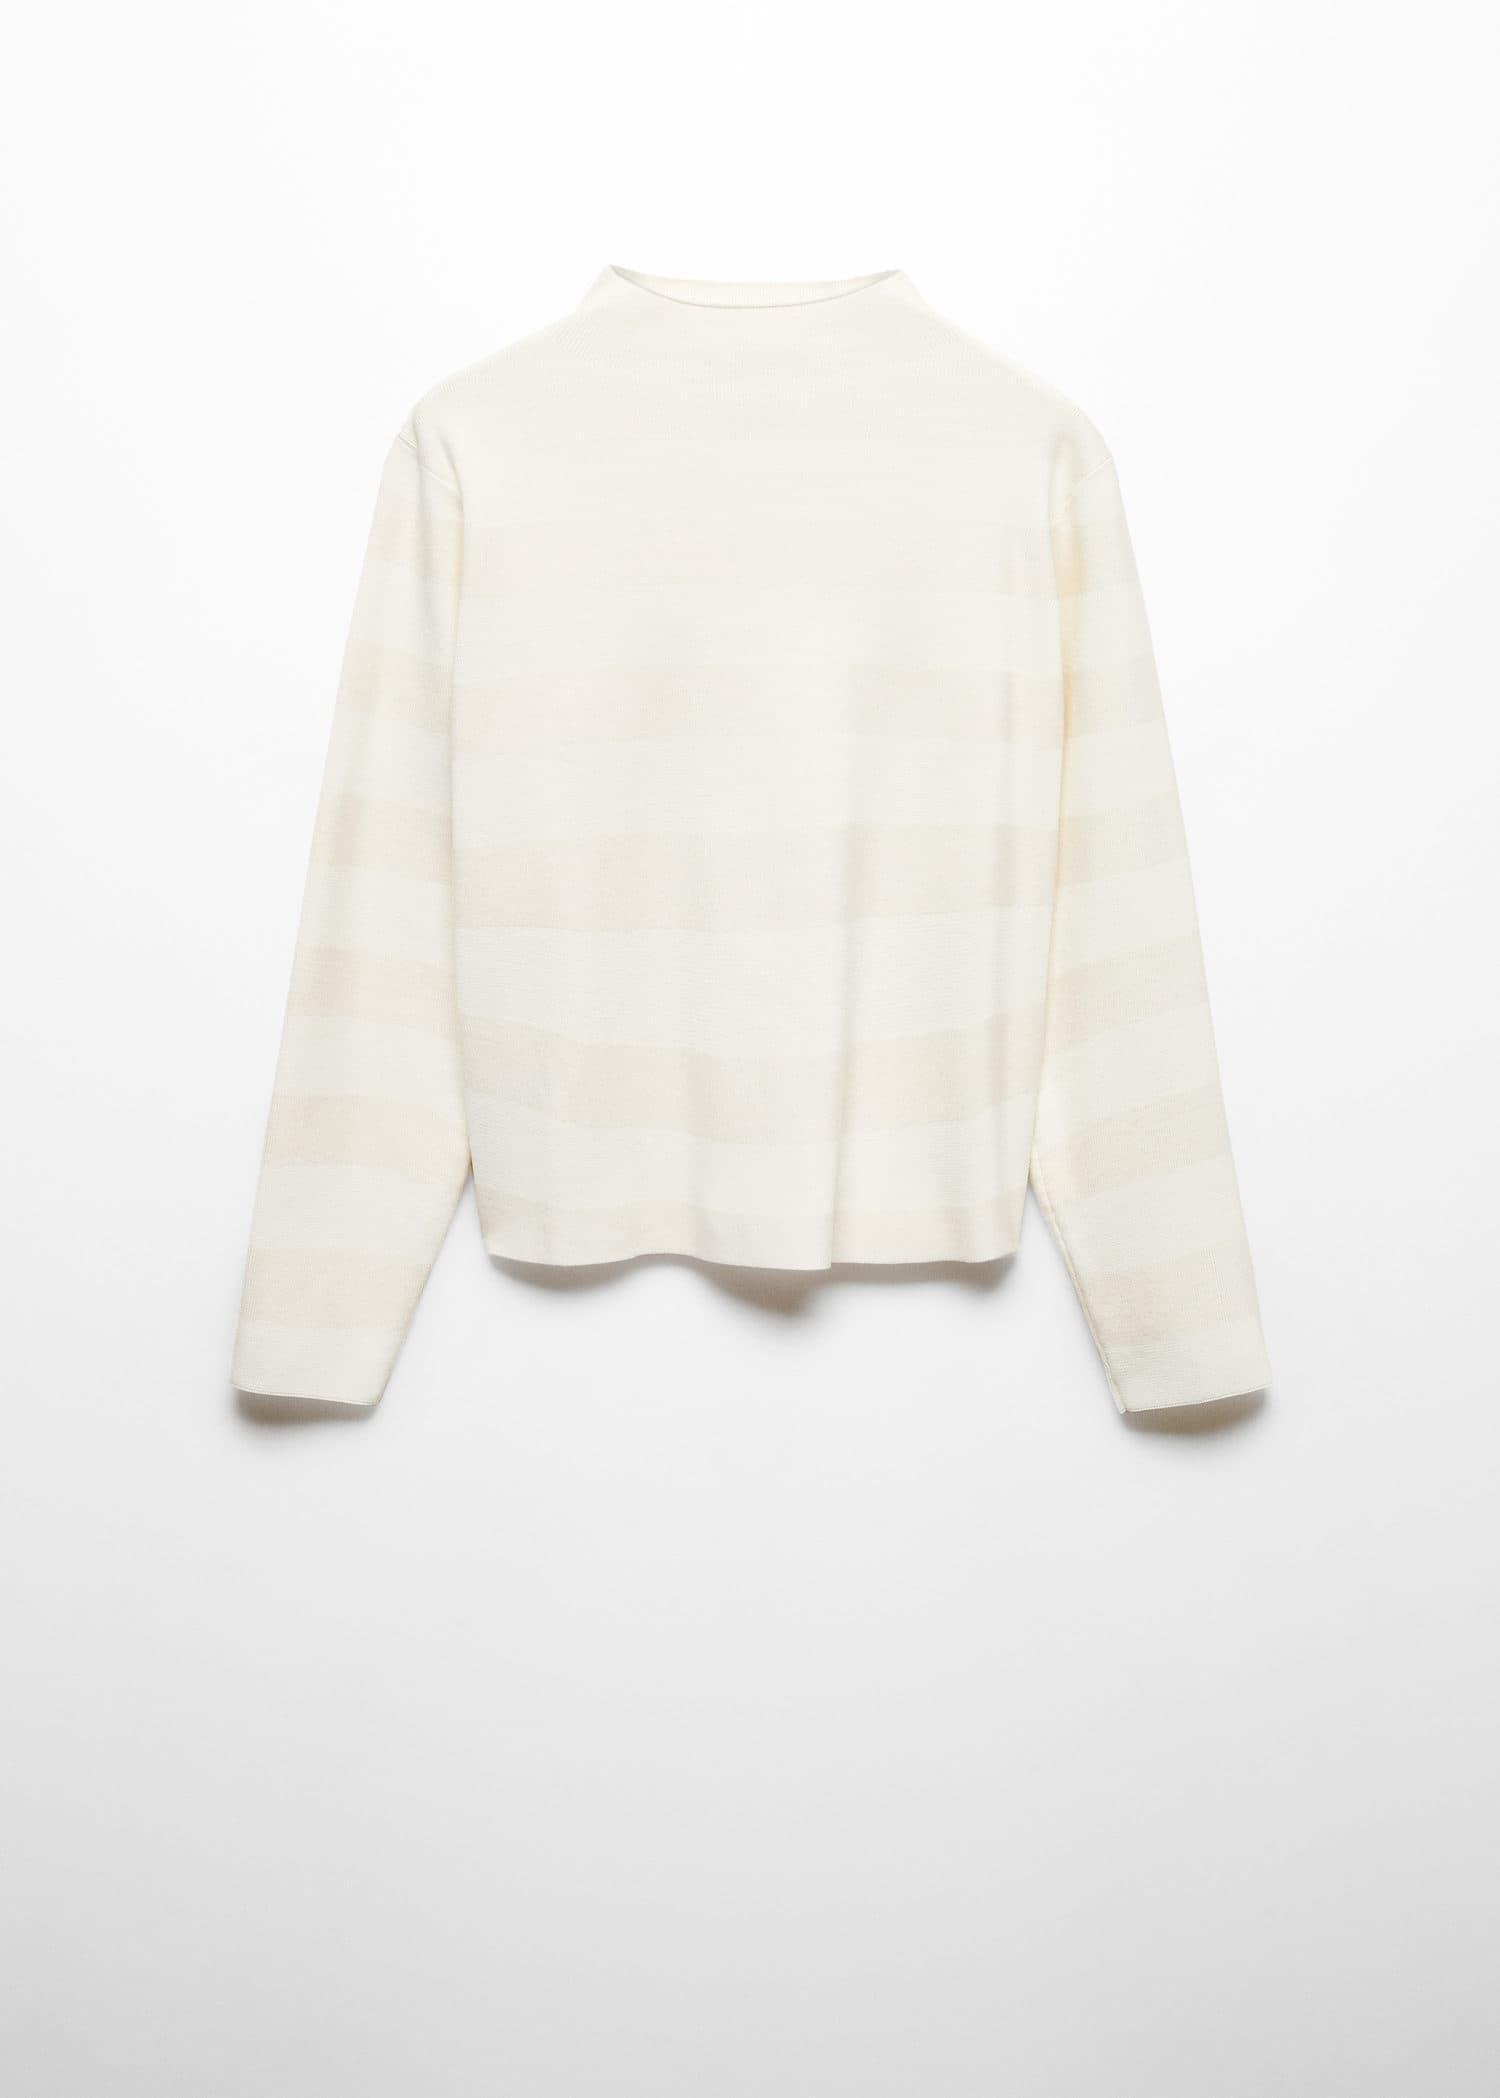 Mango - Beige High Collar Sweater